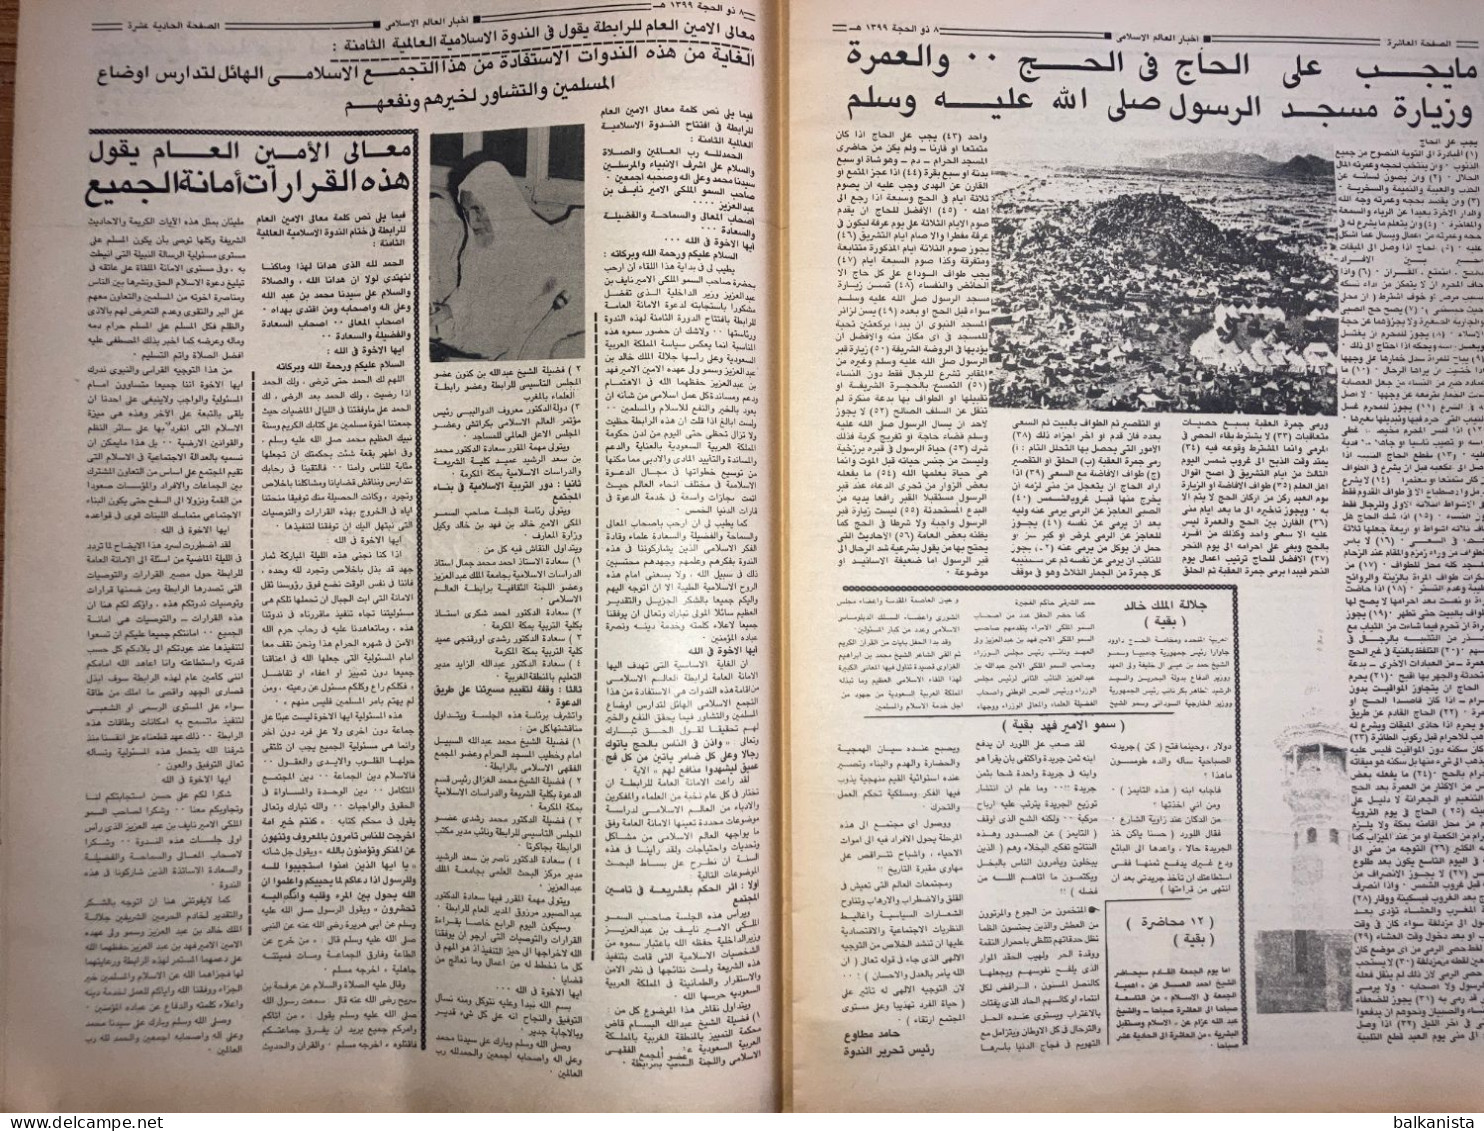 Saudi Arabia  Akhbar al-Alam al-Islami Newspaper  29 October 1979